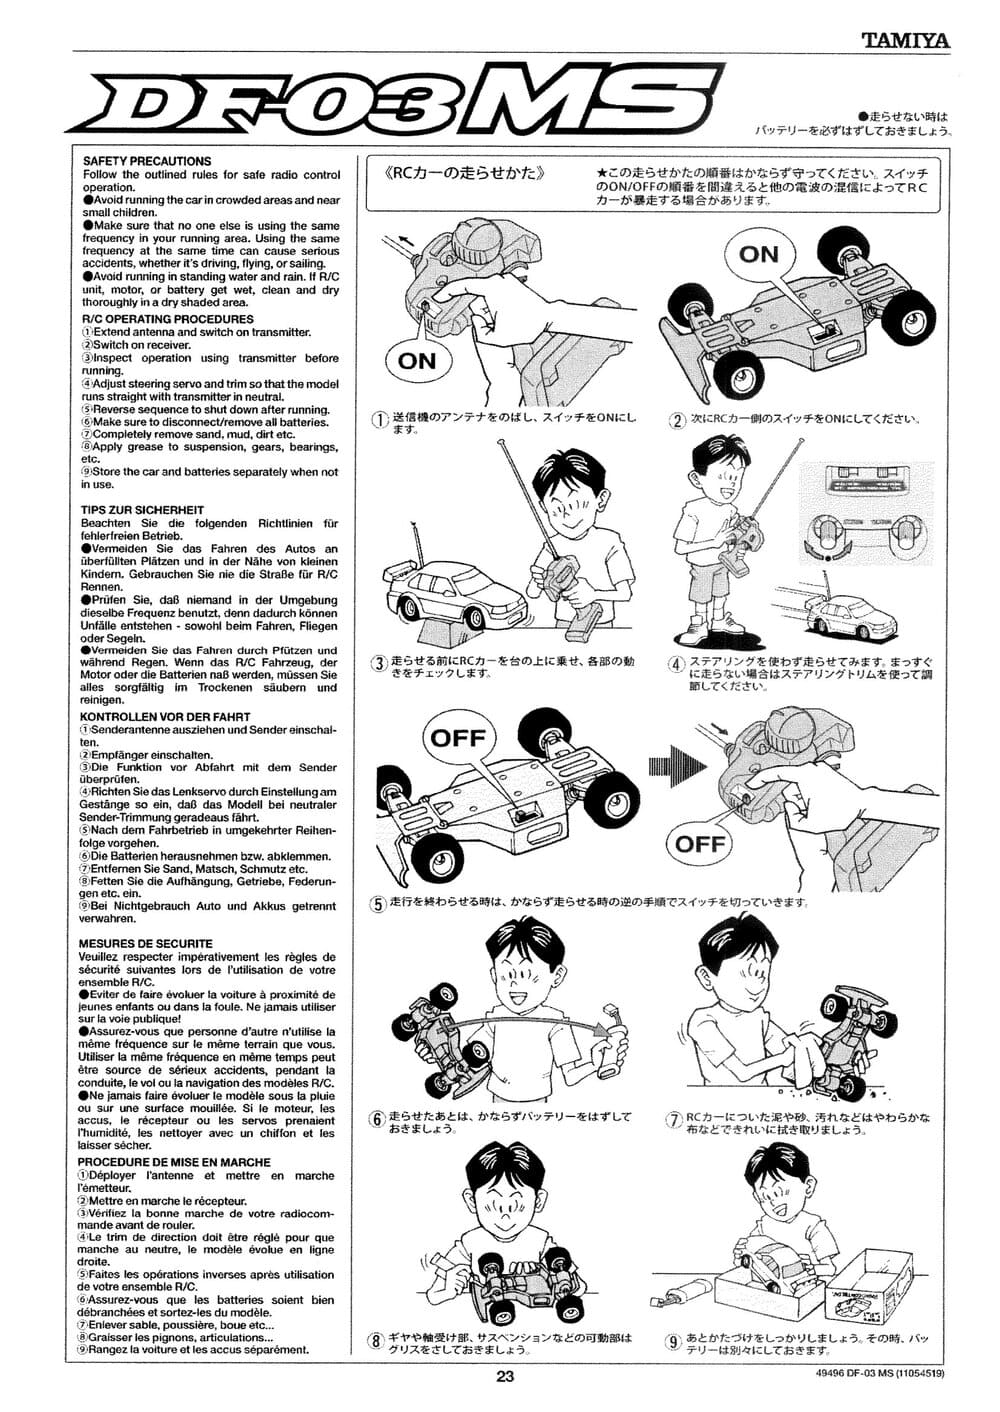 Tamiya - DF-03 MS Chassis Chassis - Manual - Page 23